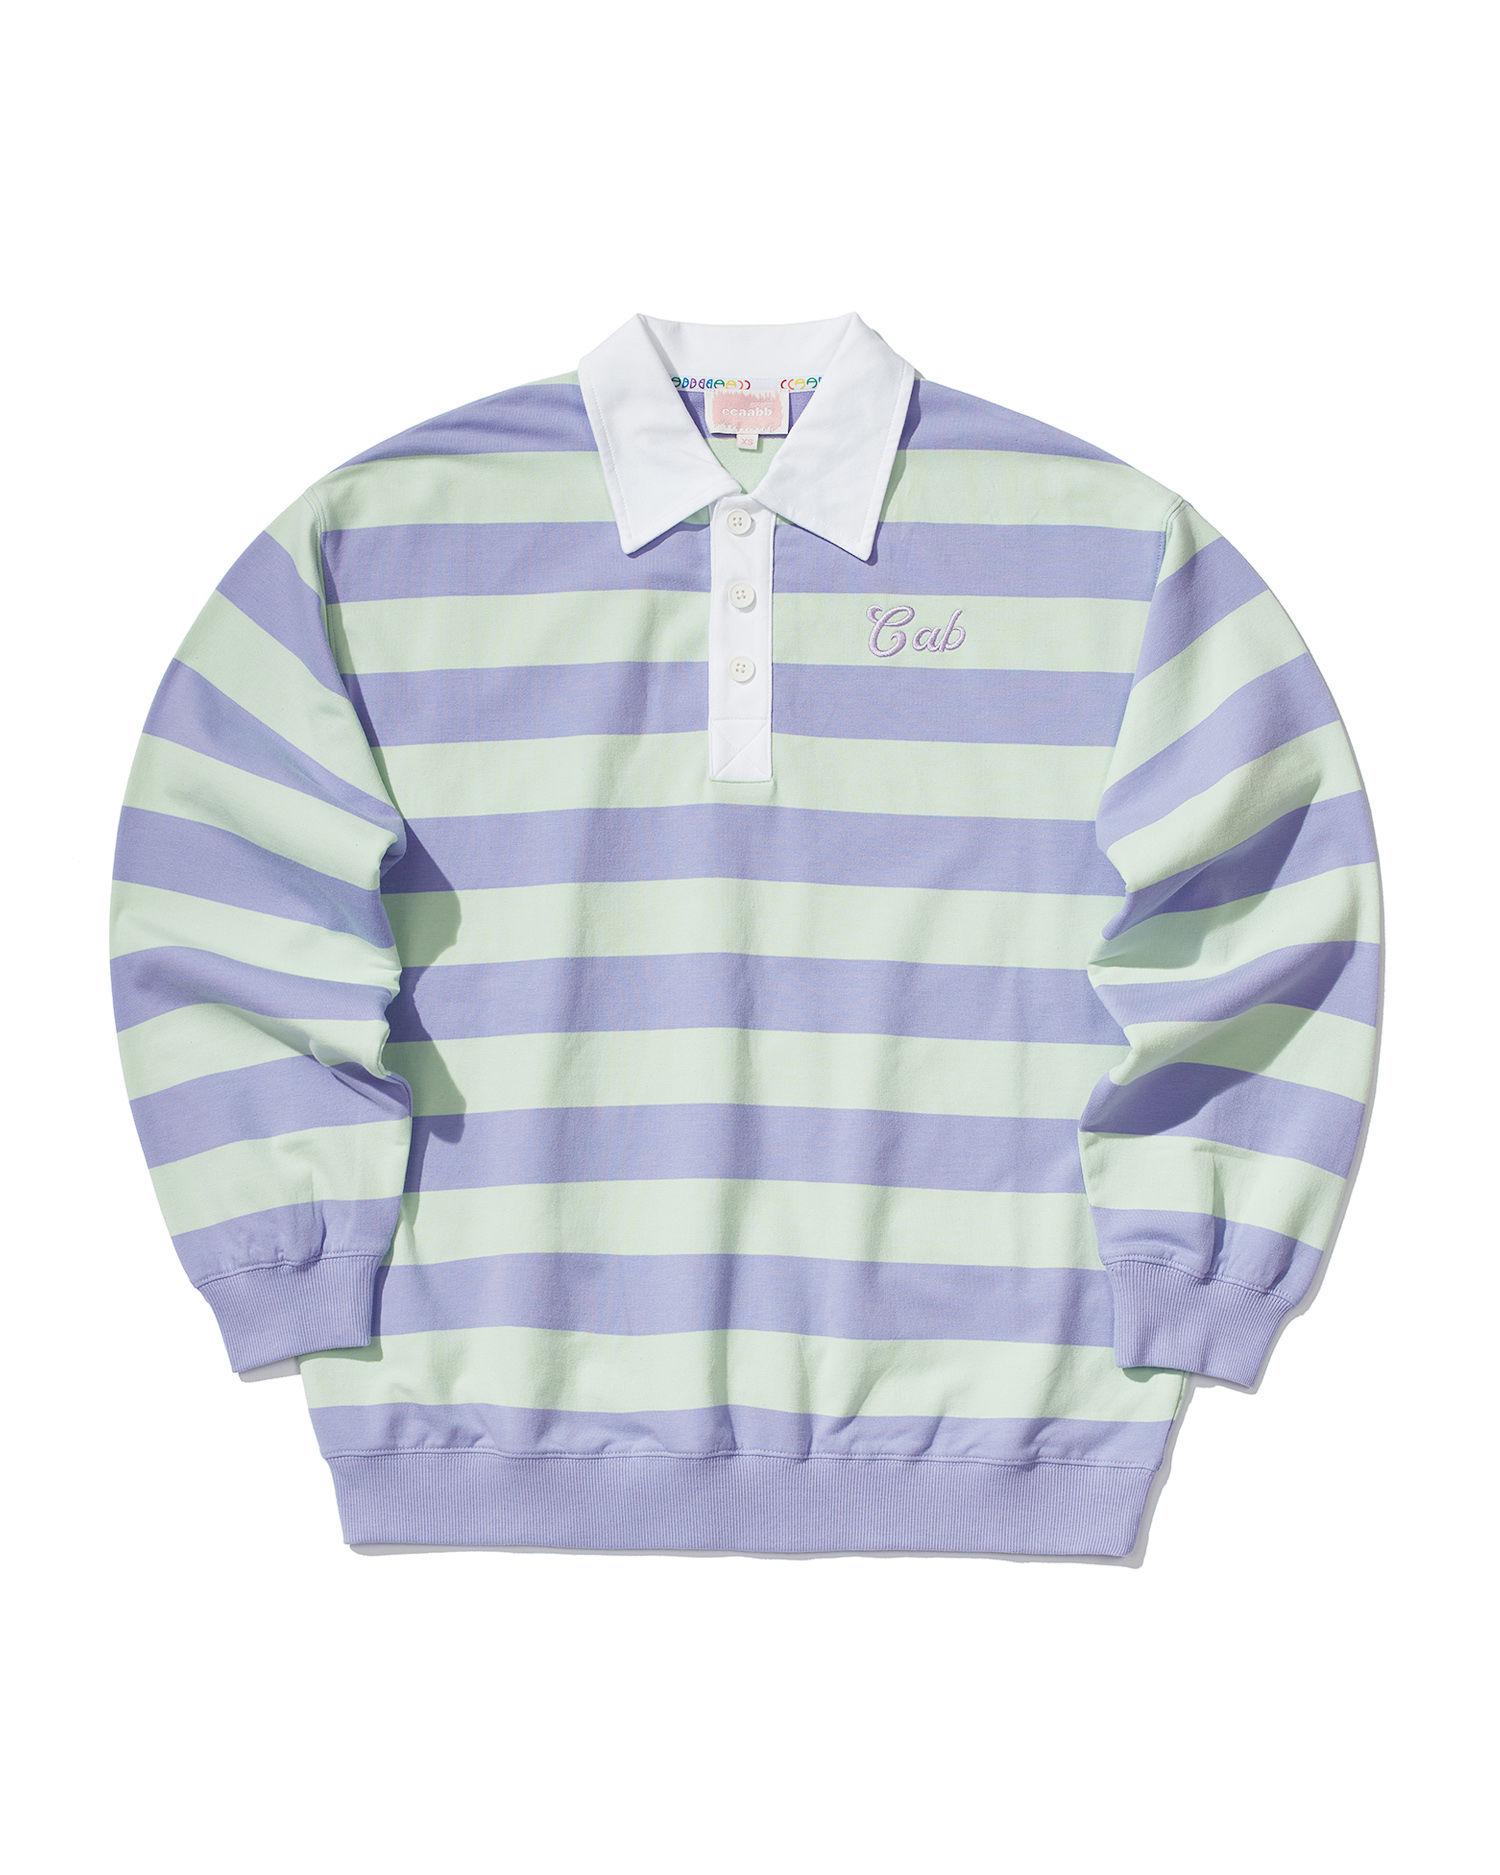 Striped polo sweatshirt by CCAABB